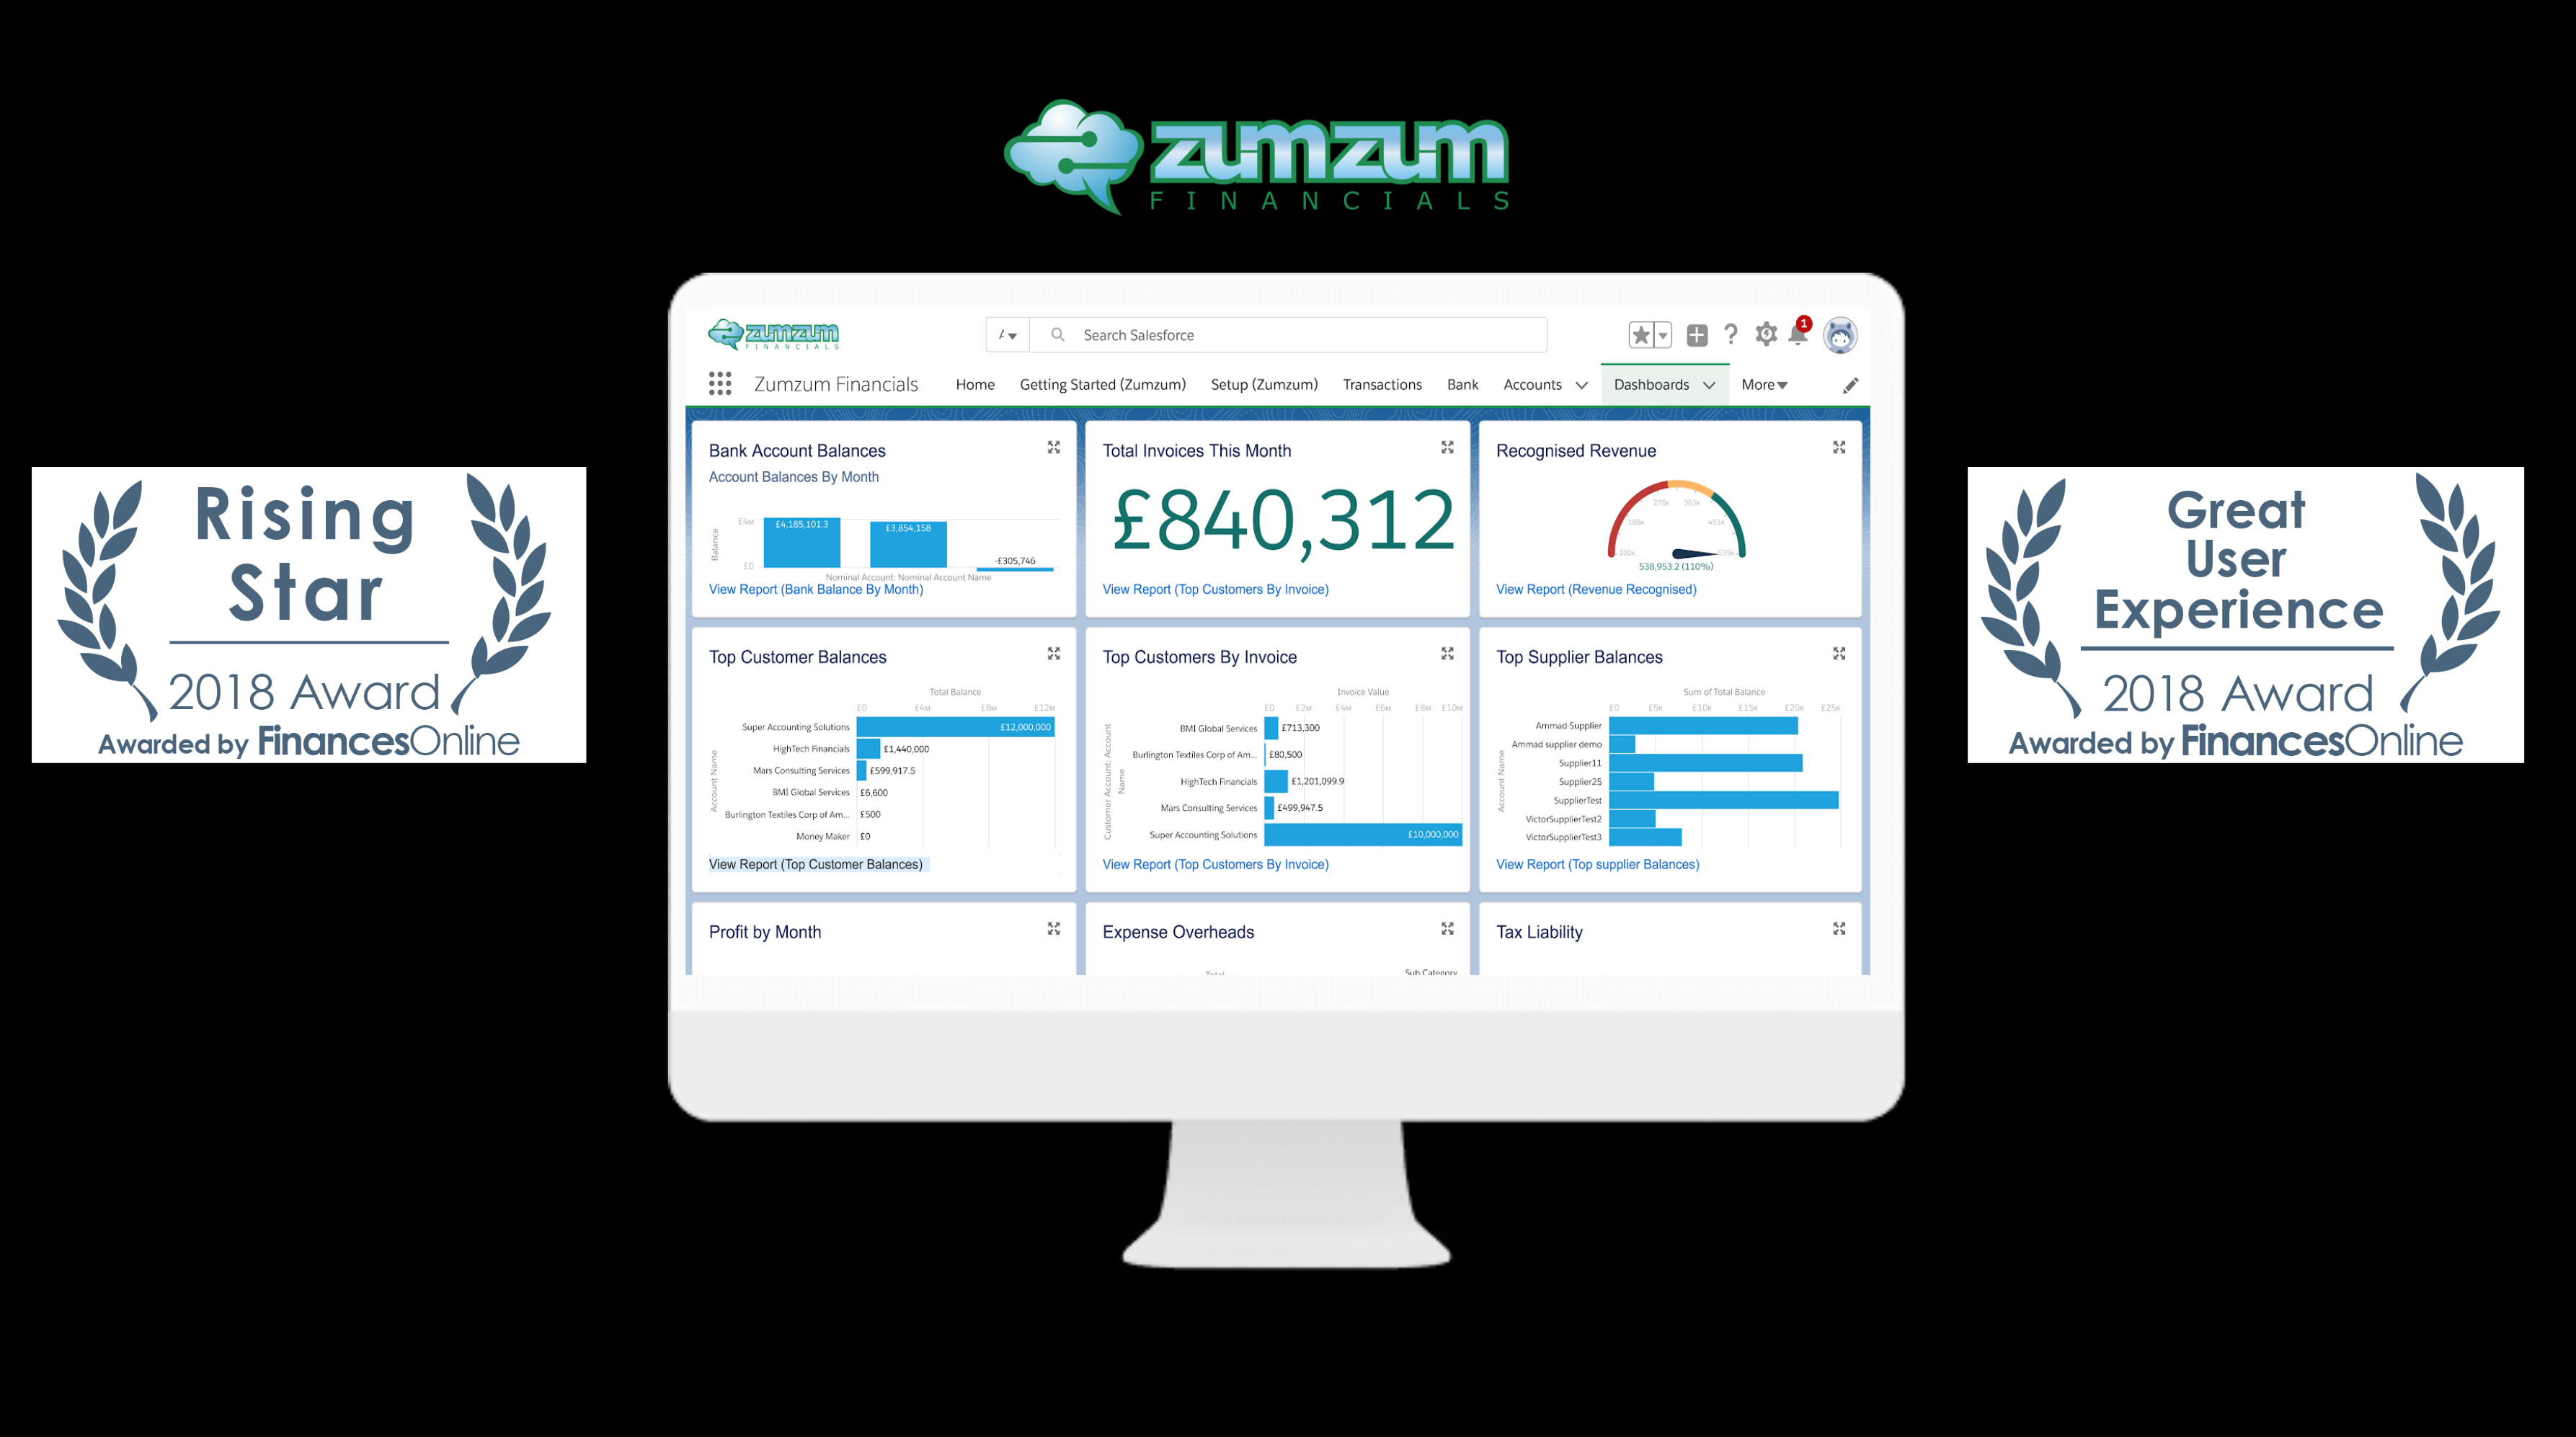 Zumzum Financials, SMB Accounting Software for Salesforce, wins 2018